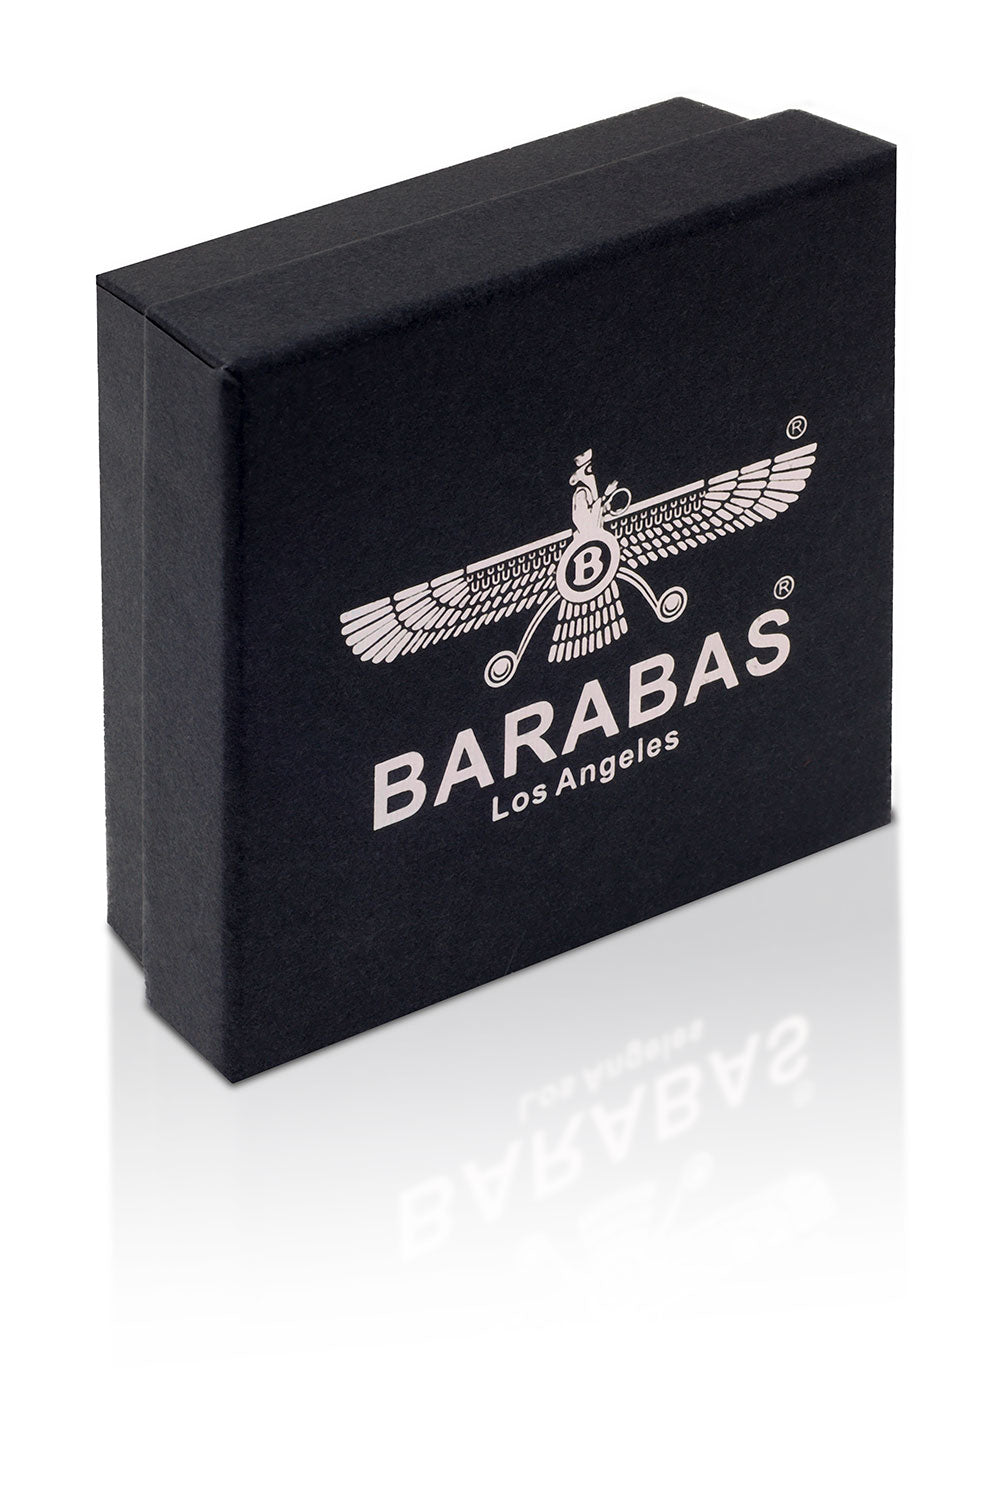 Barabas Unisex Braided Leather Anchor Bangle Bracelets 4BMS03 Black Silver